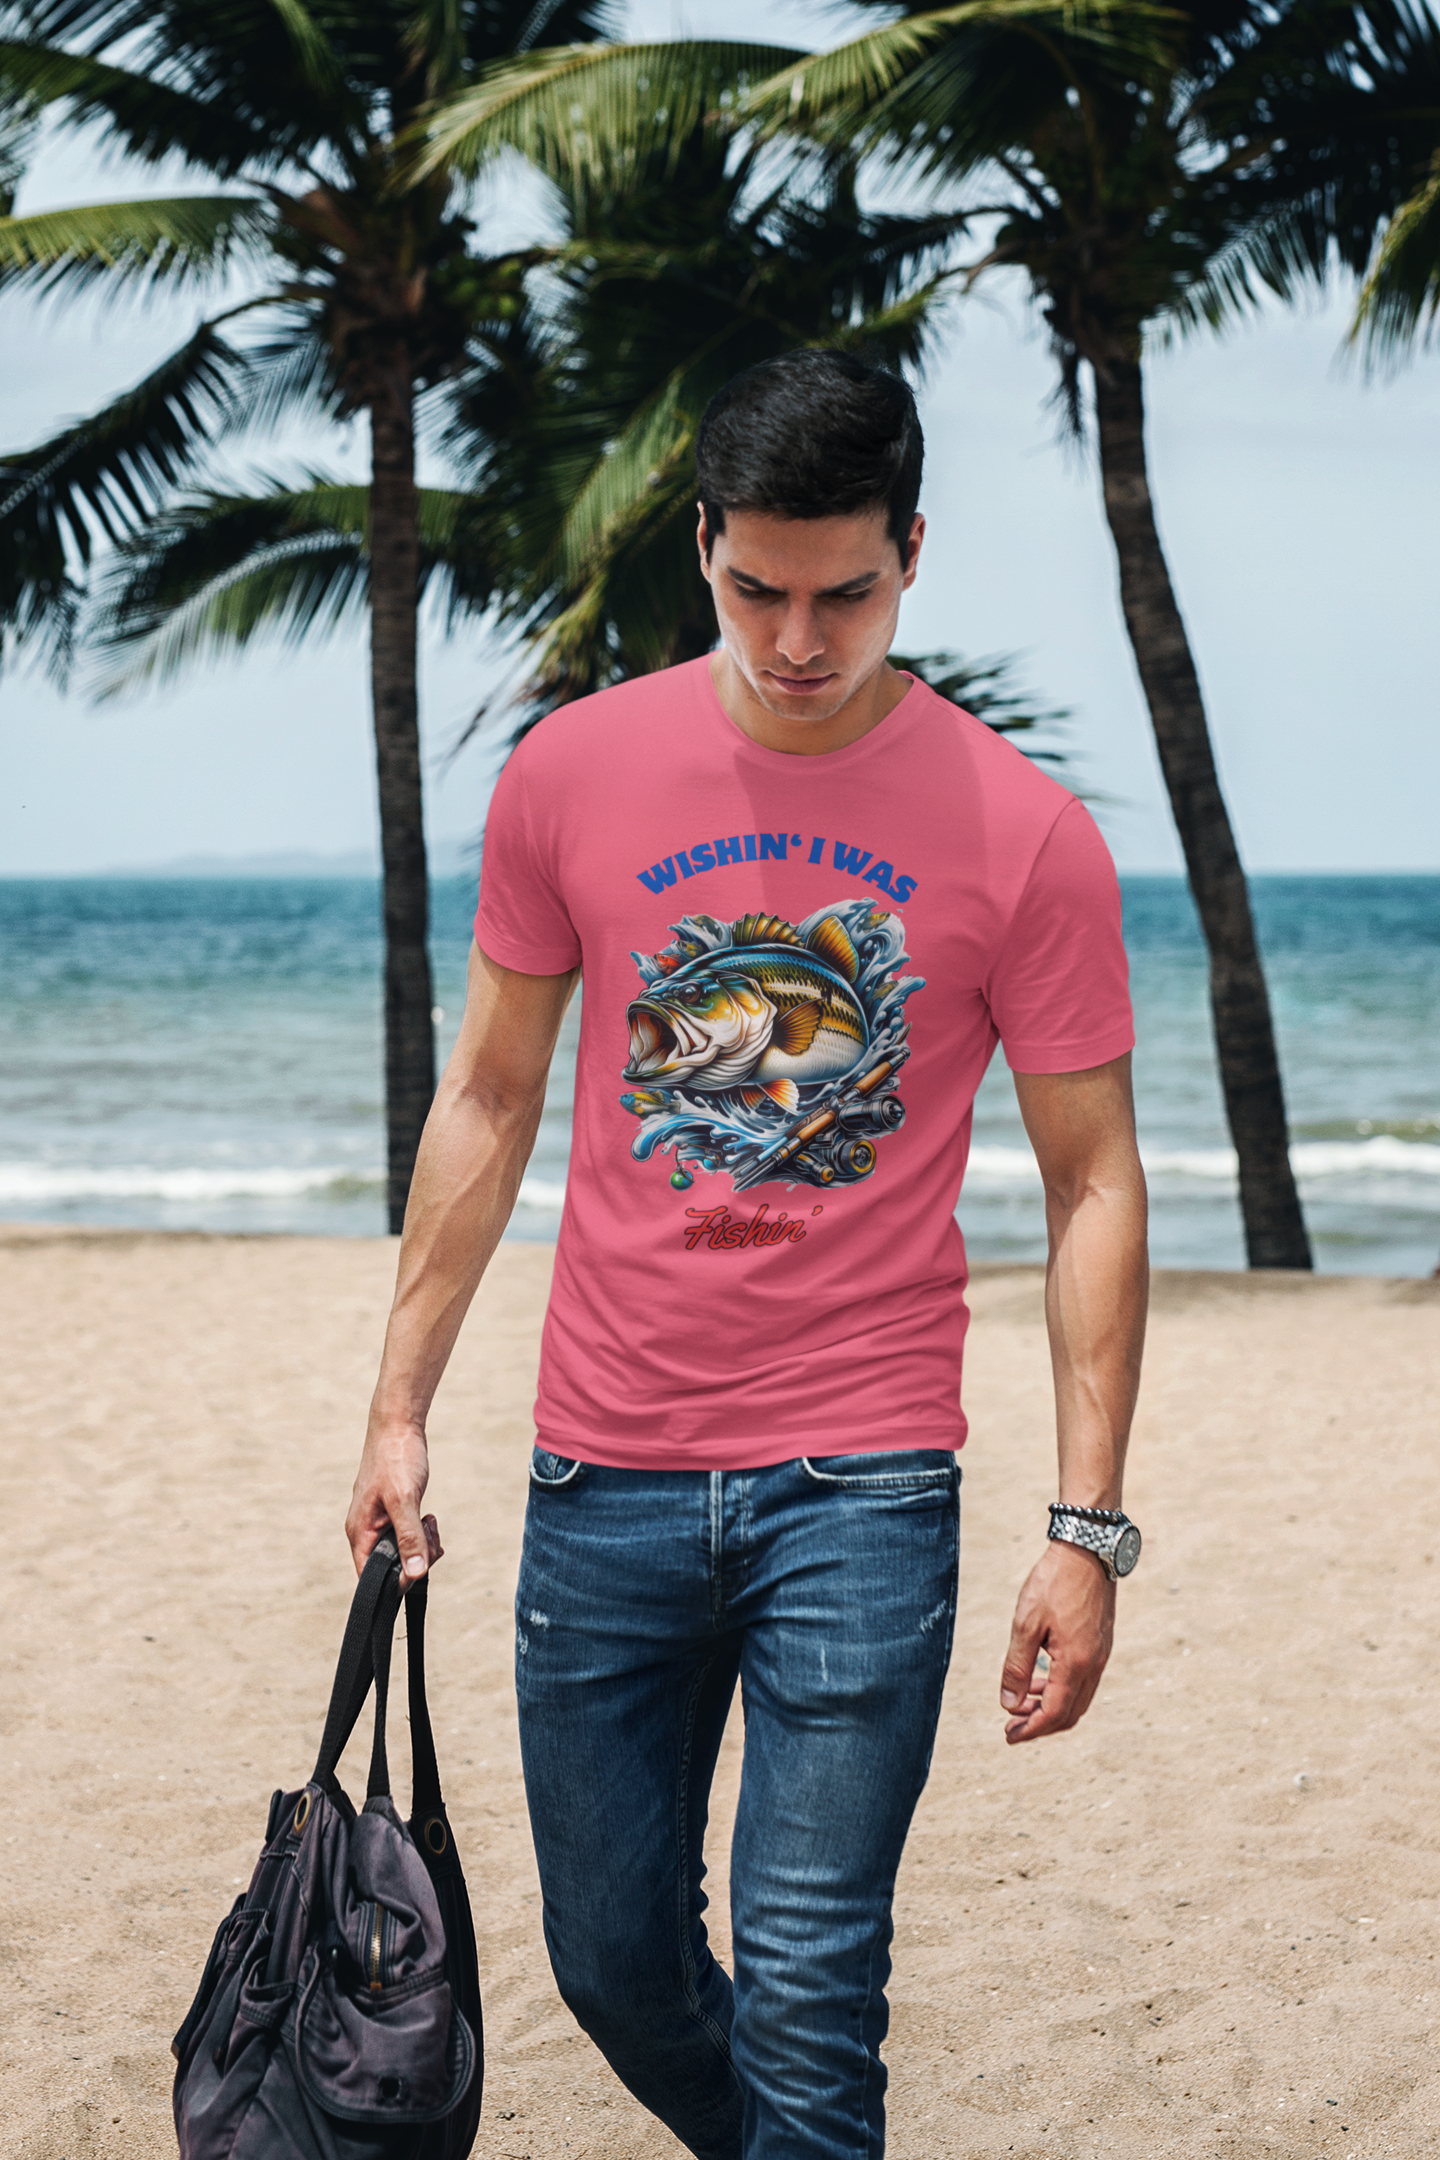 "Premium 'Wishin' I Was Fishin'' Graphic Tee - Angler's Choice Cotton T-Shirt"